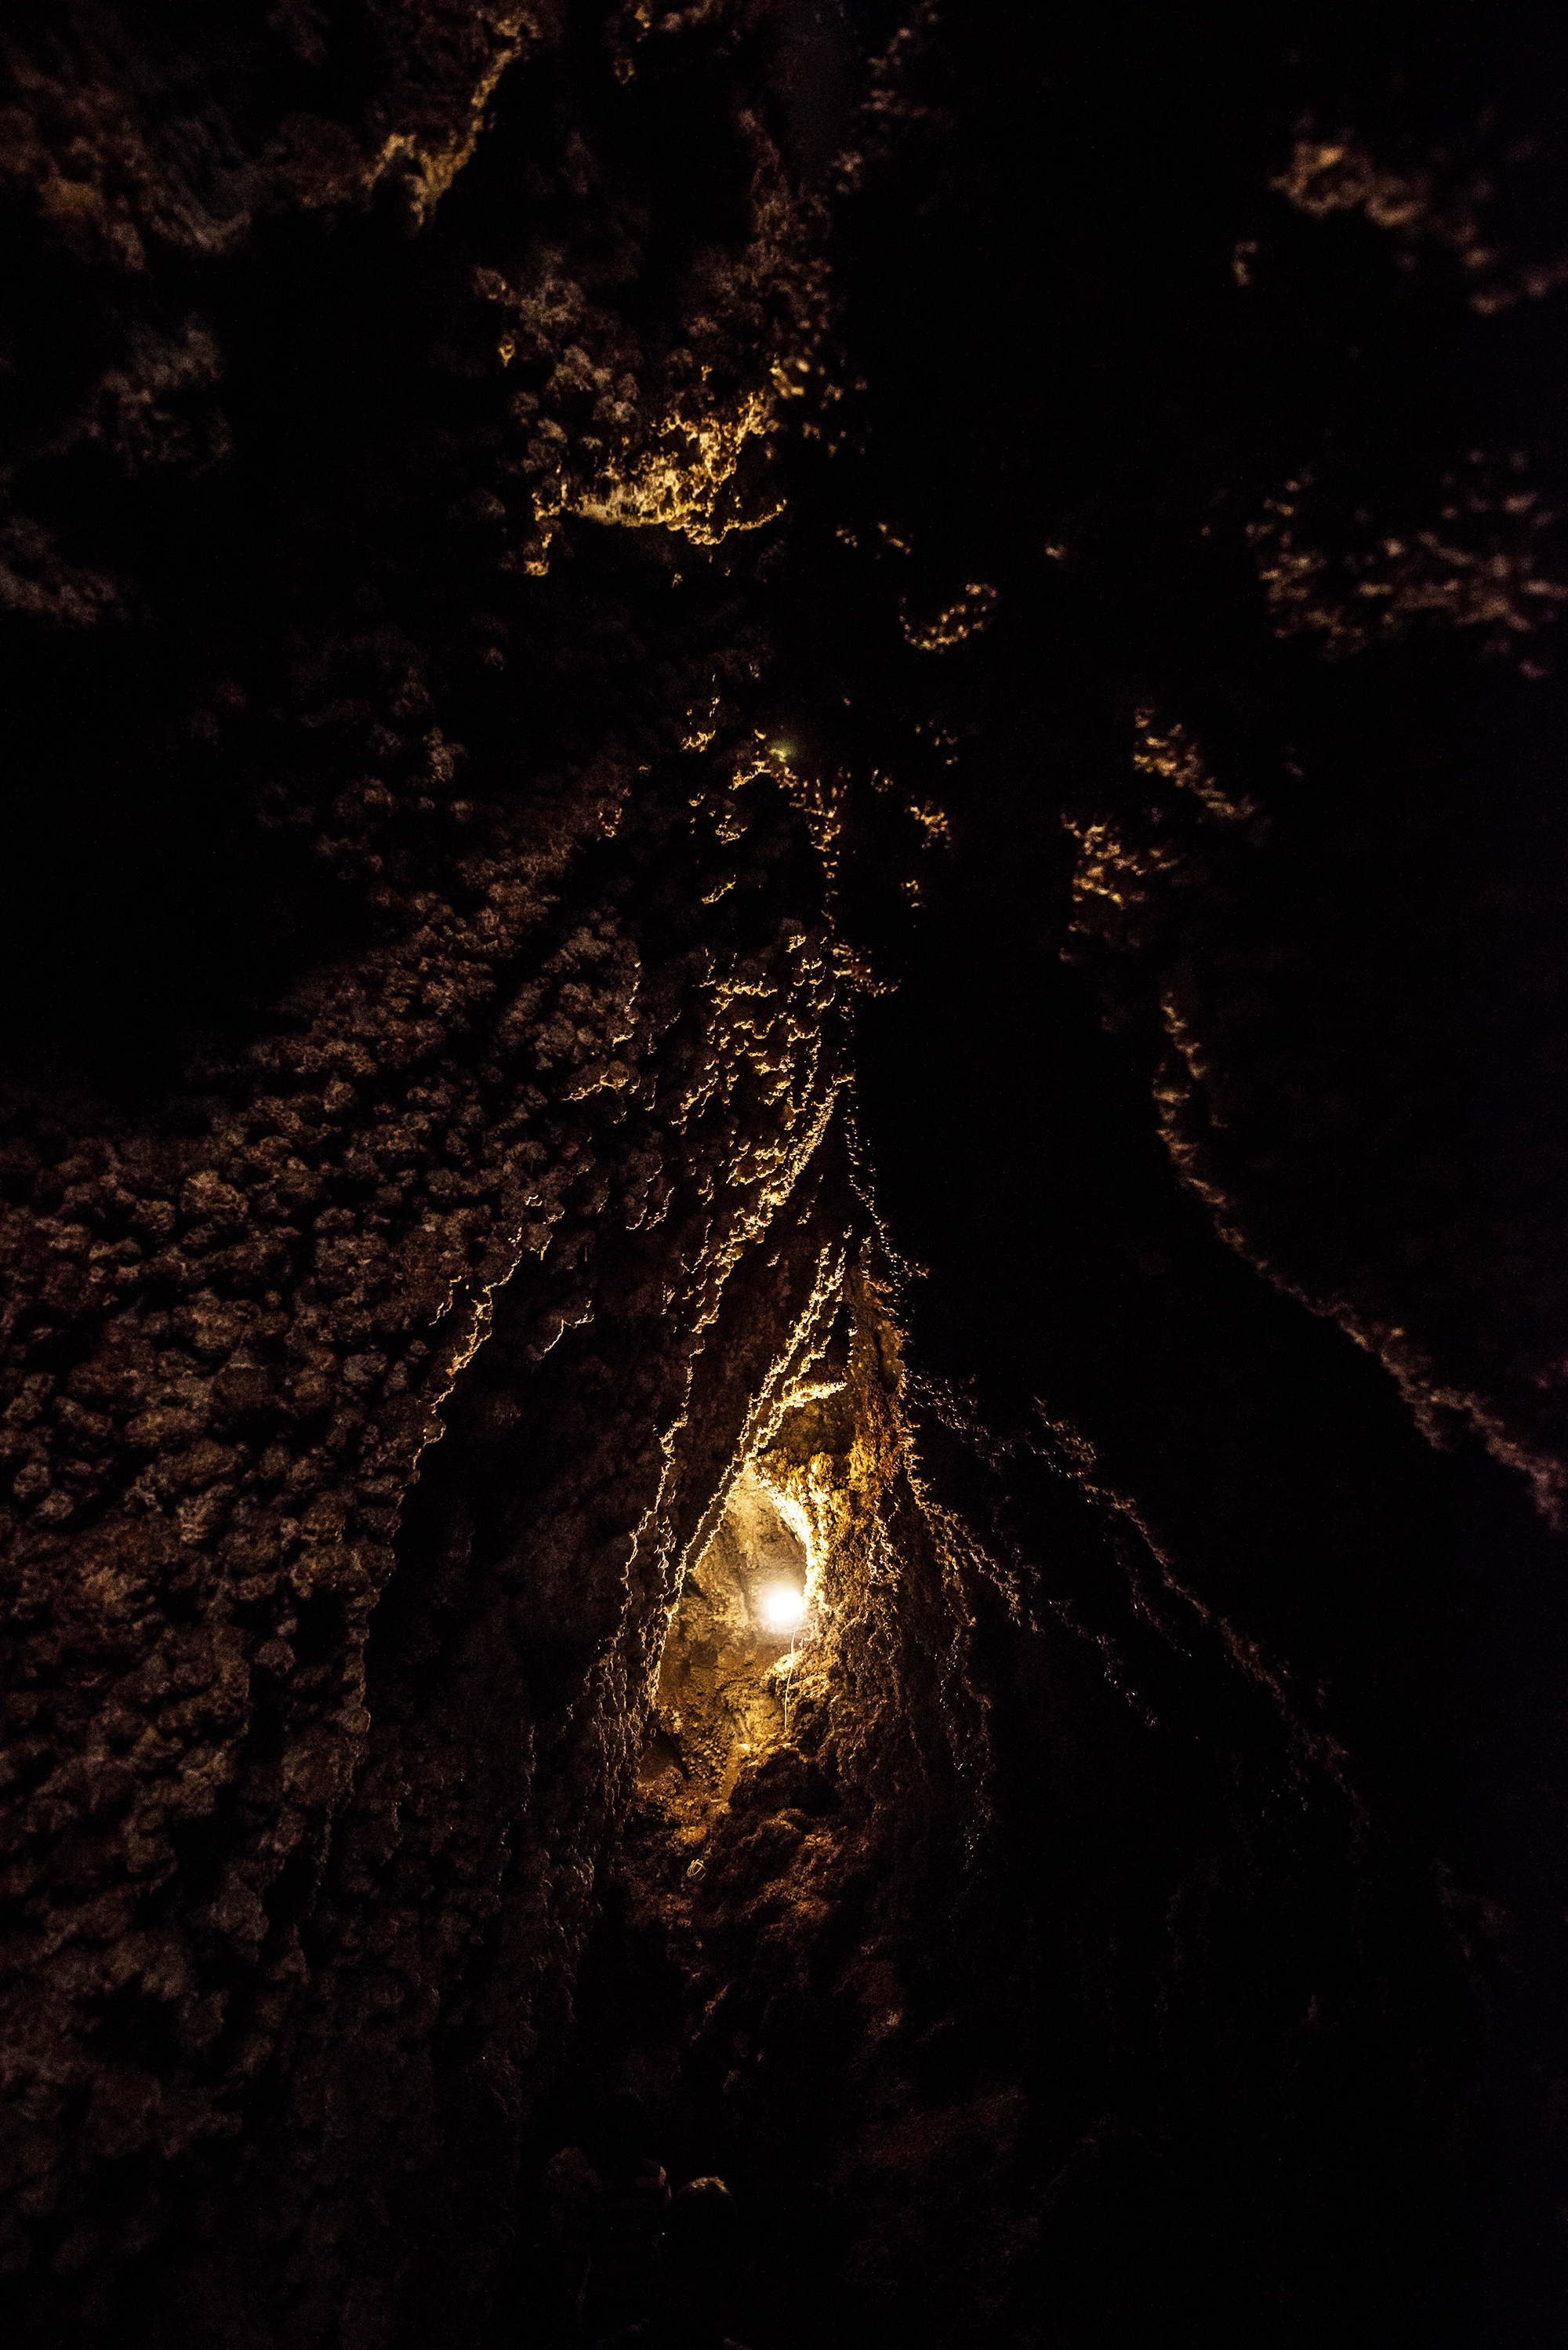 Uhlovitsa cave in Bulgaria